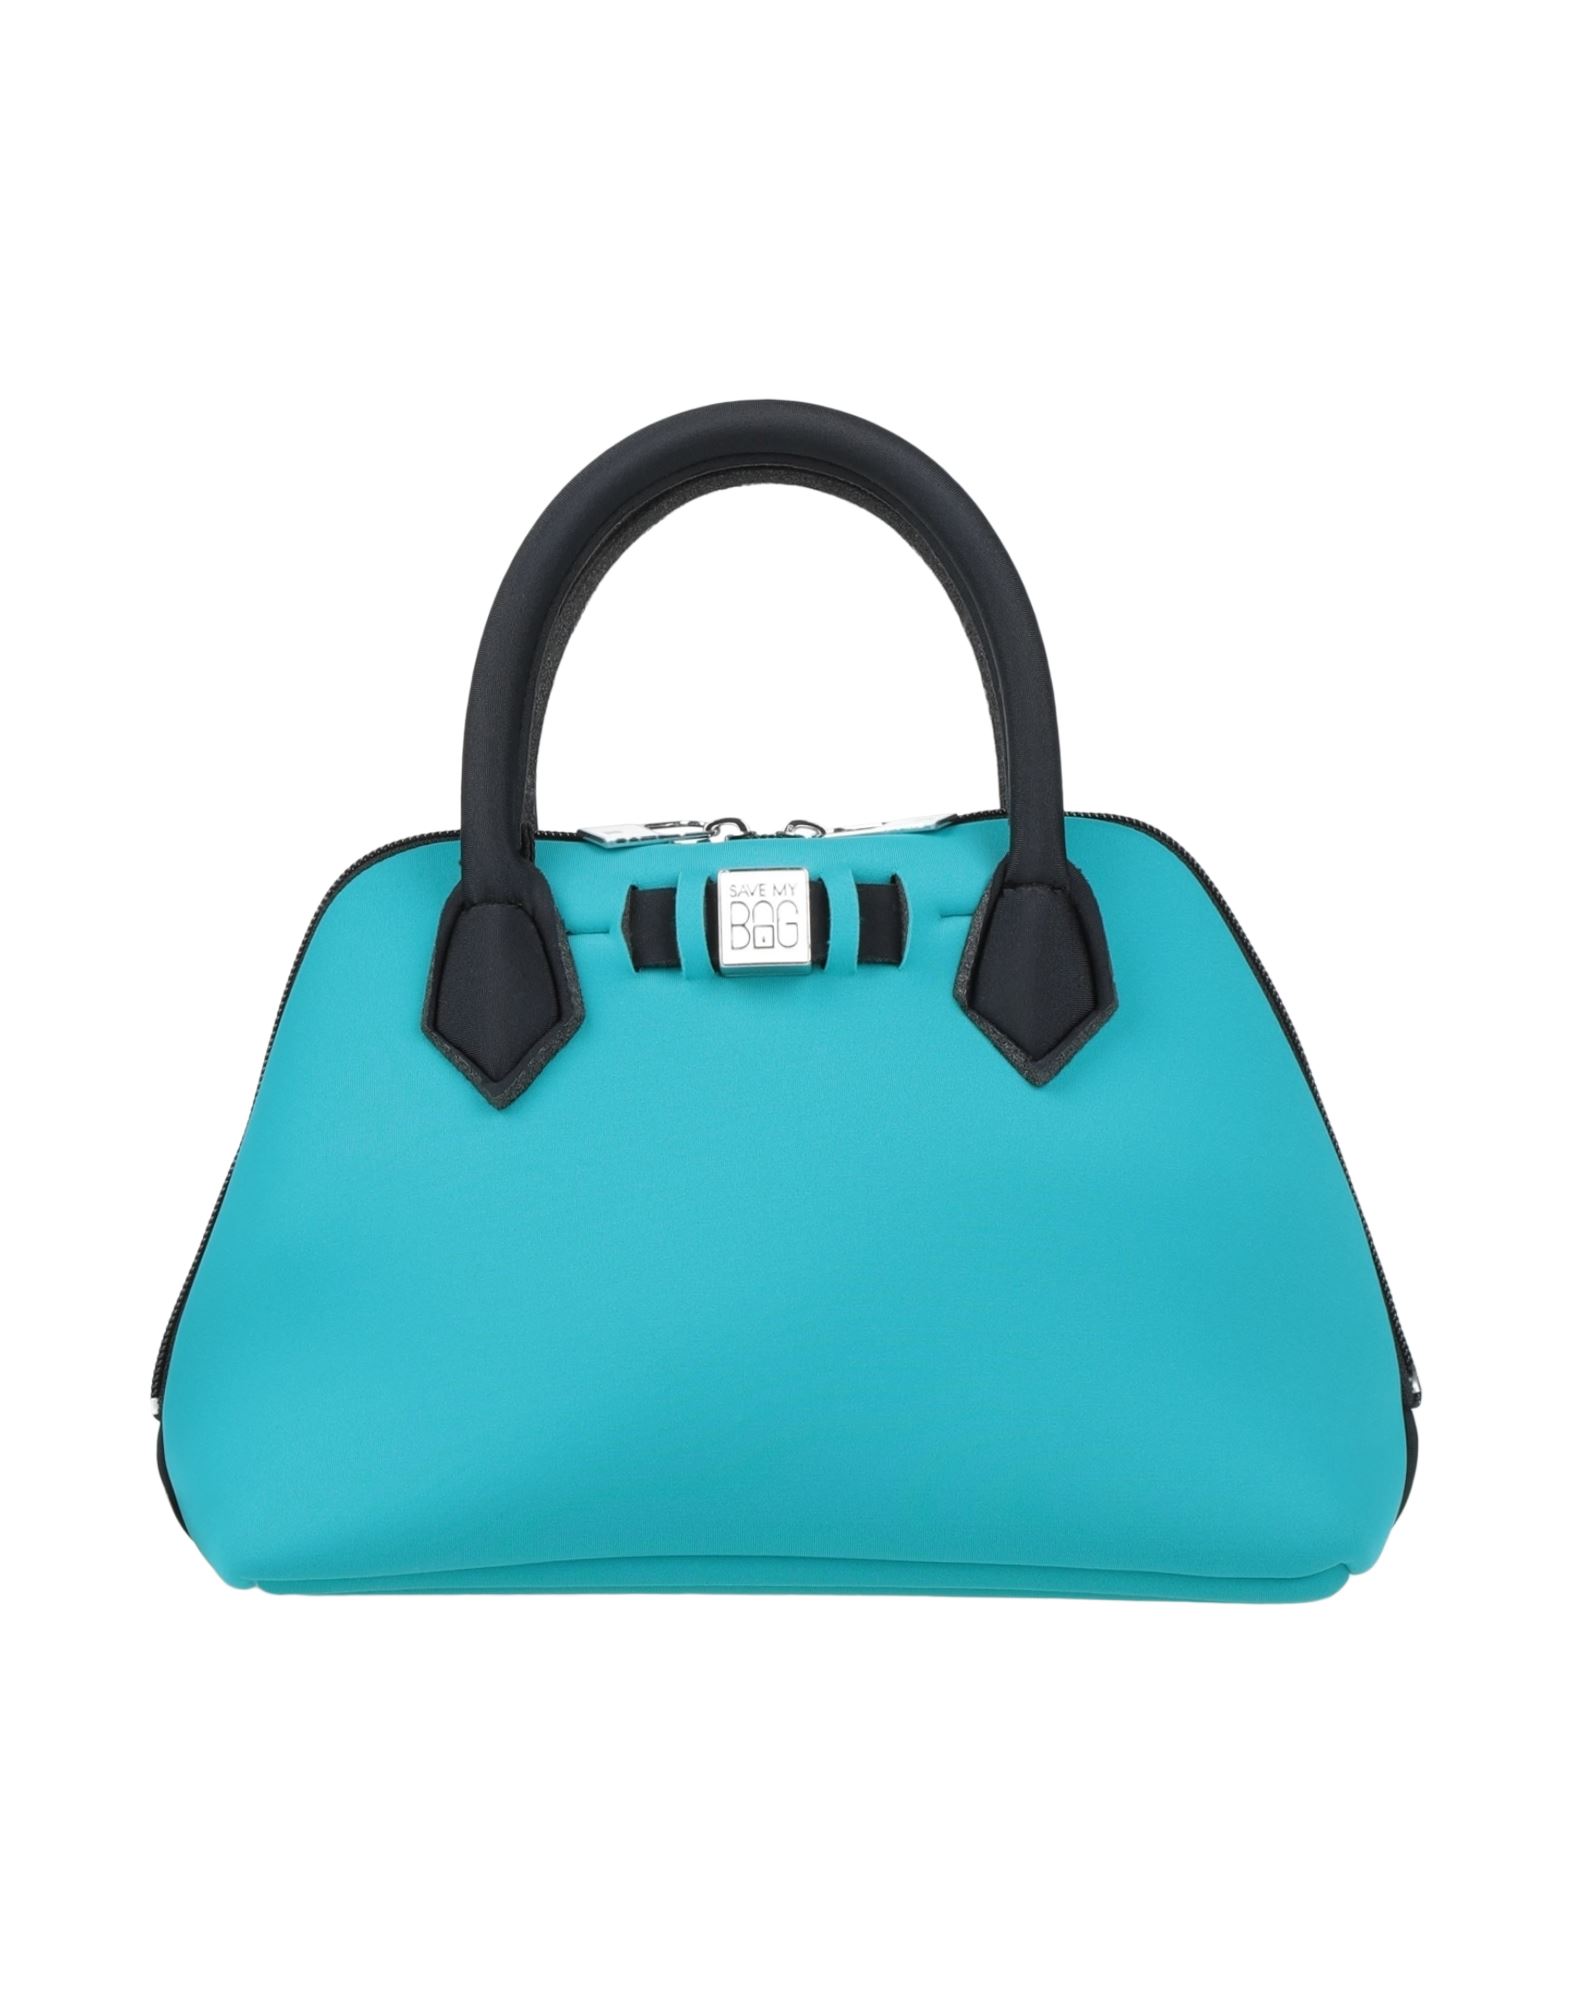 Save My Bag Handbag In Turquoise